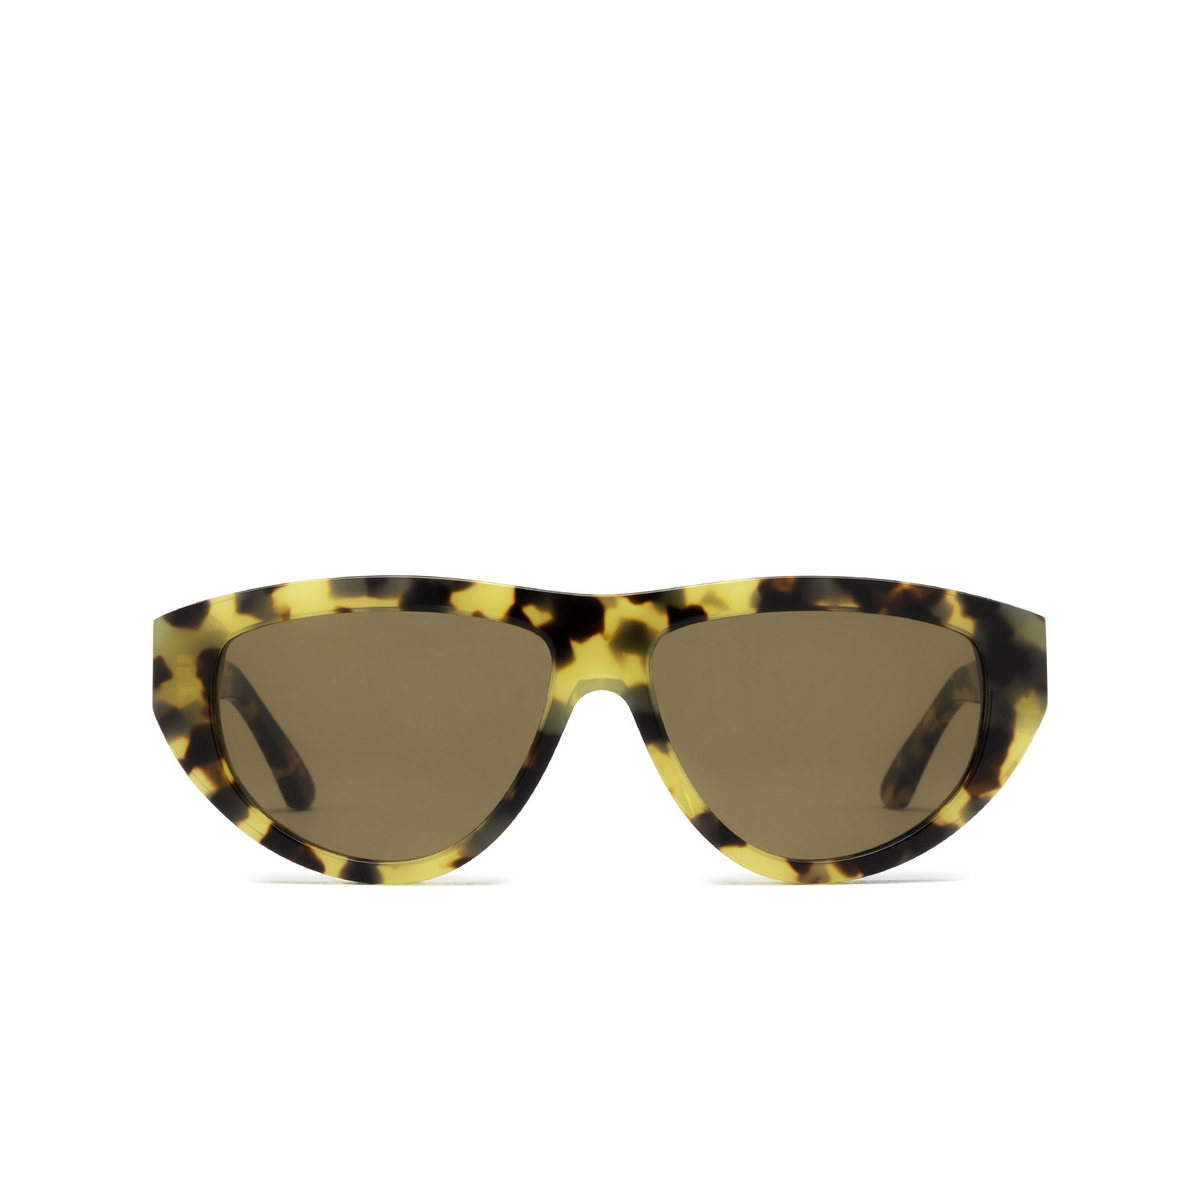 Huma® Oval Sunglasses: Viko color Havana Maculate 19 - front view.